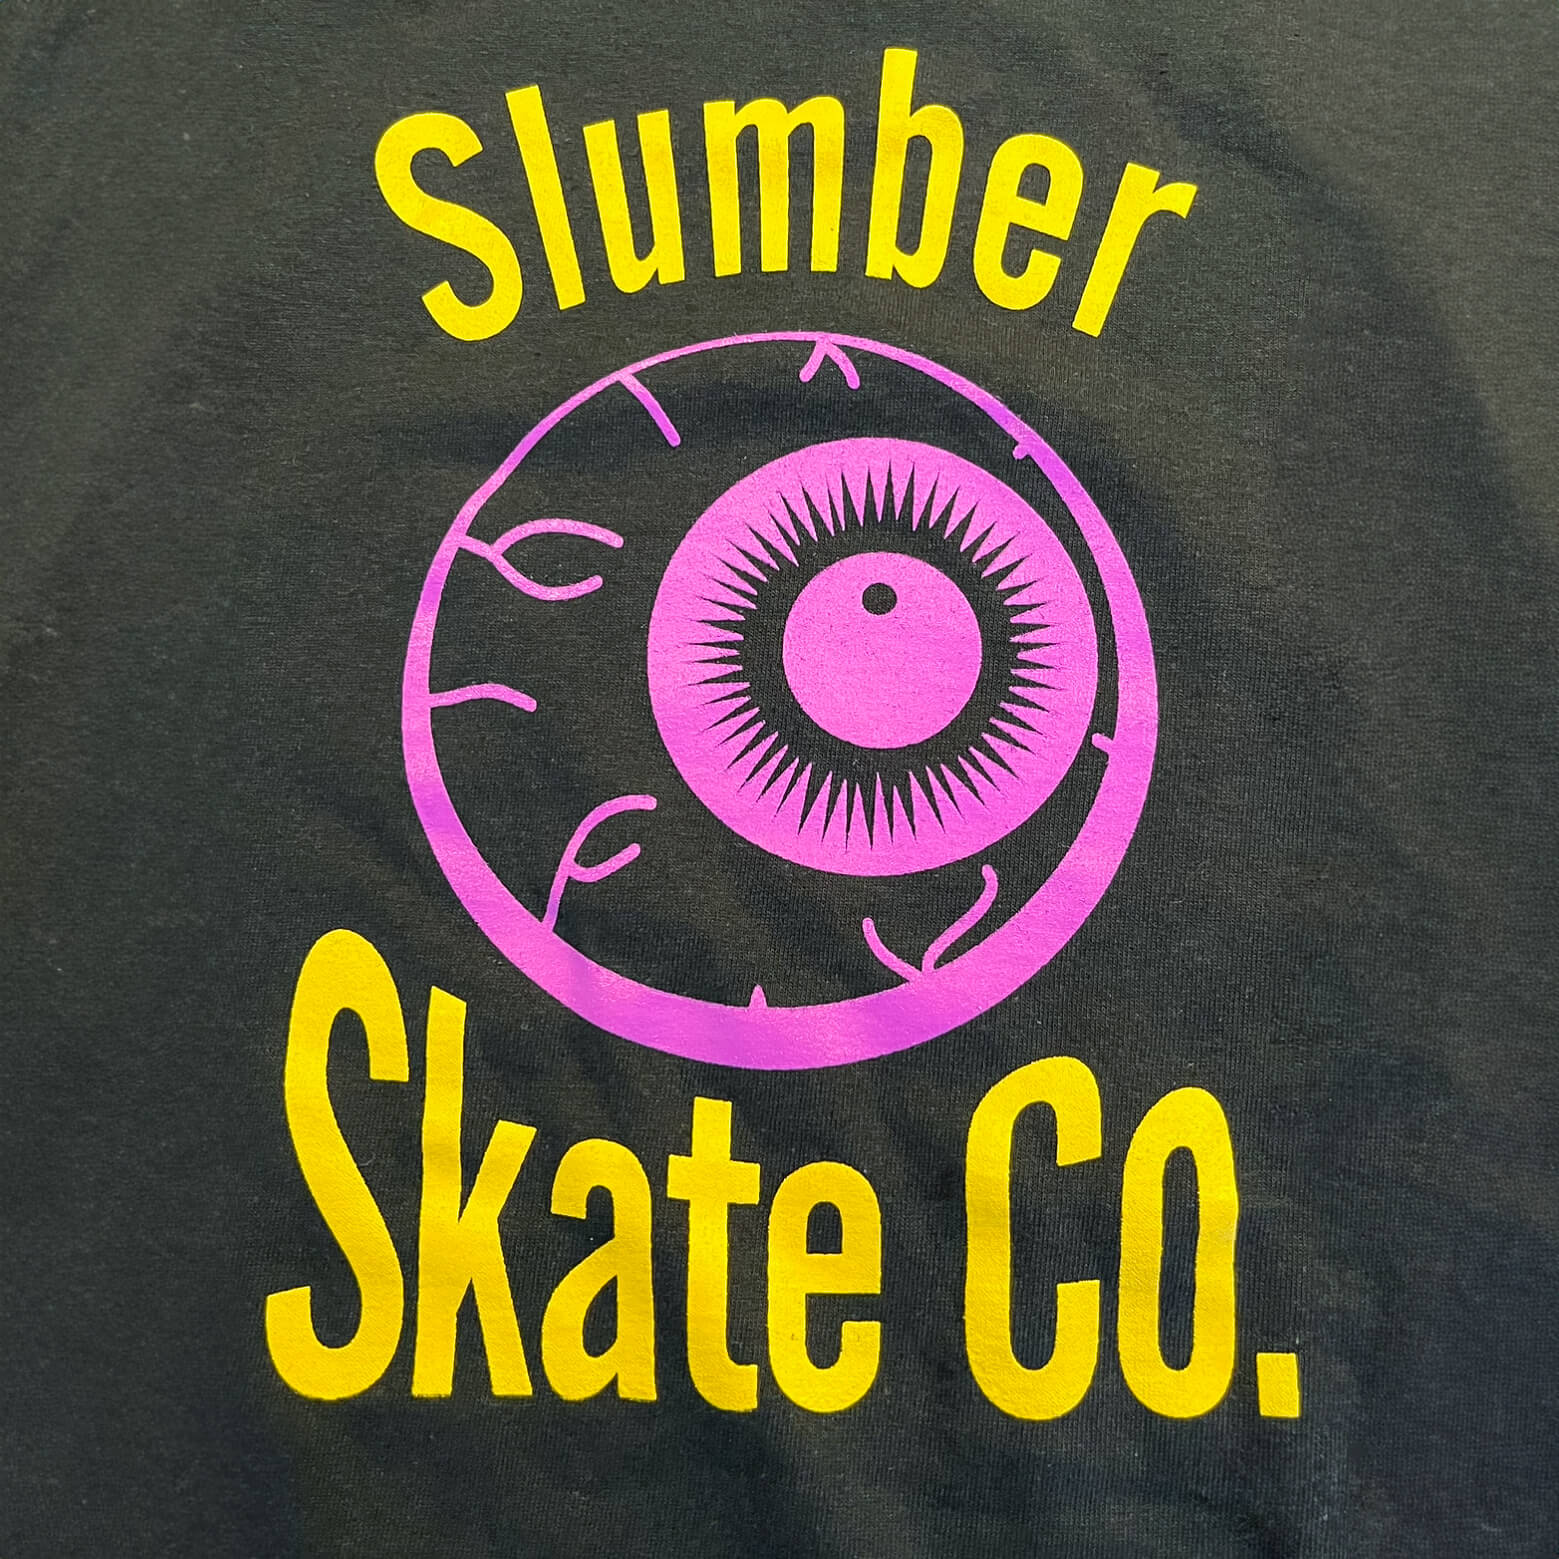 Original Slumber Eye, Black Sweatshirt - Sweatshirt - Slumber Skate Co.